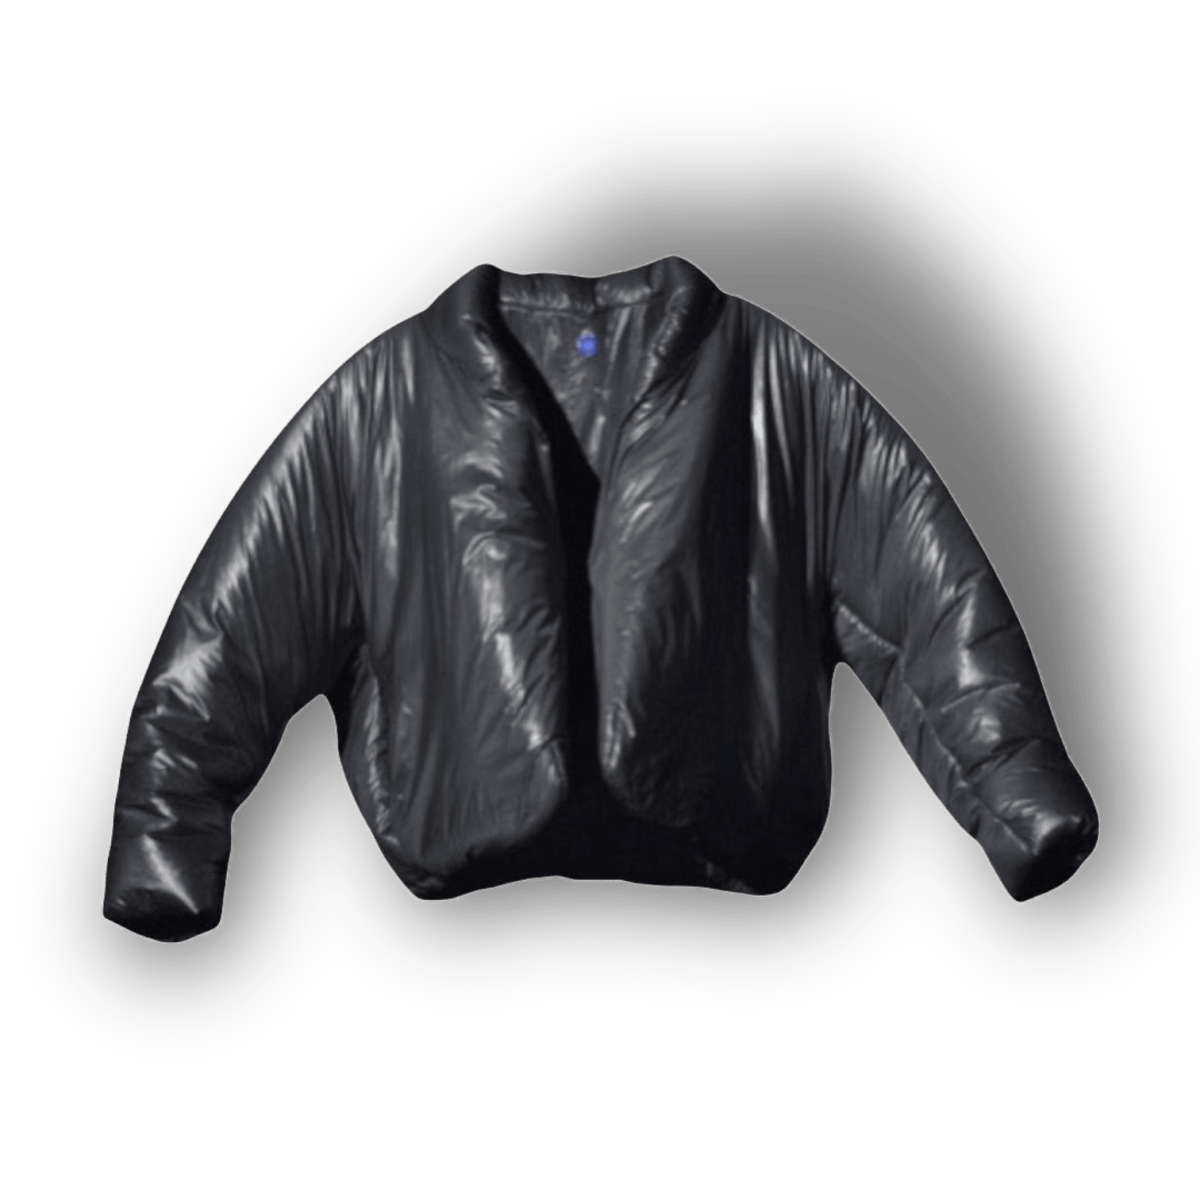 Yeezy x Gap Round Jacket Black - Outerwear - Yeezy - Jawns on Fire